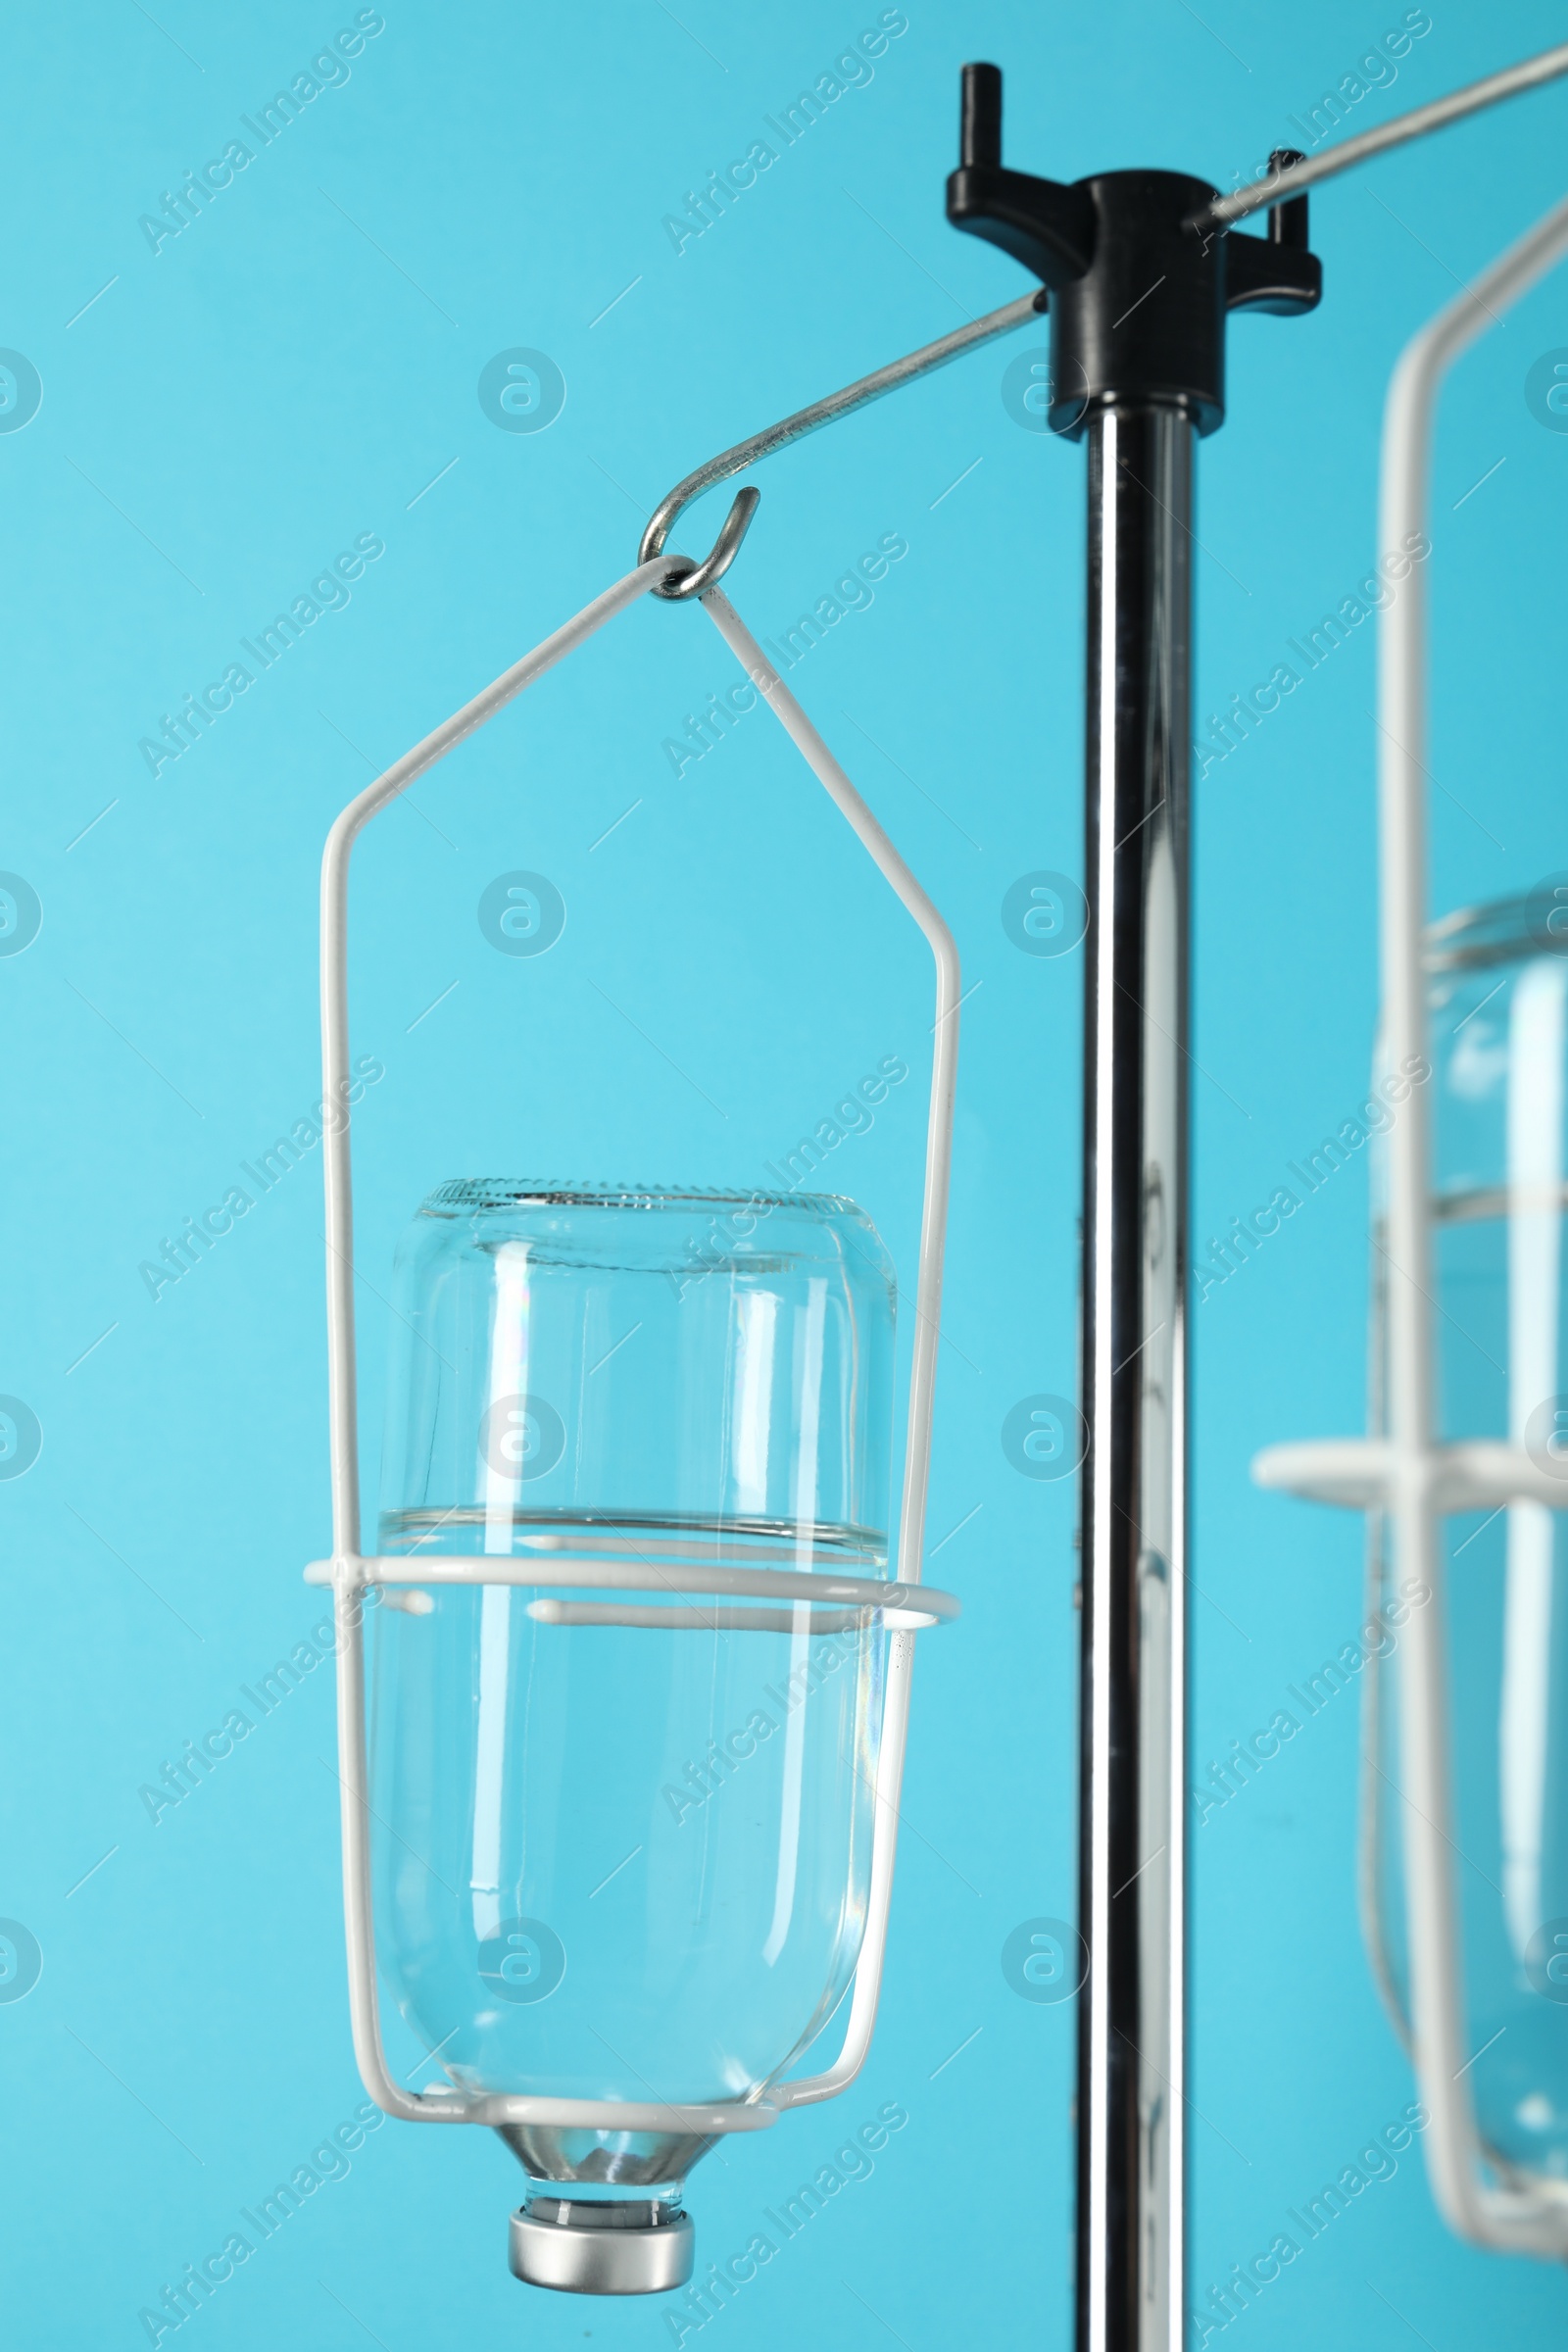 Photo of IV infusion set on pole against light blue background, closeup